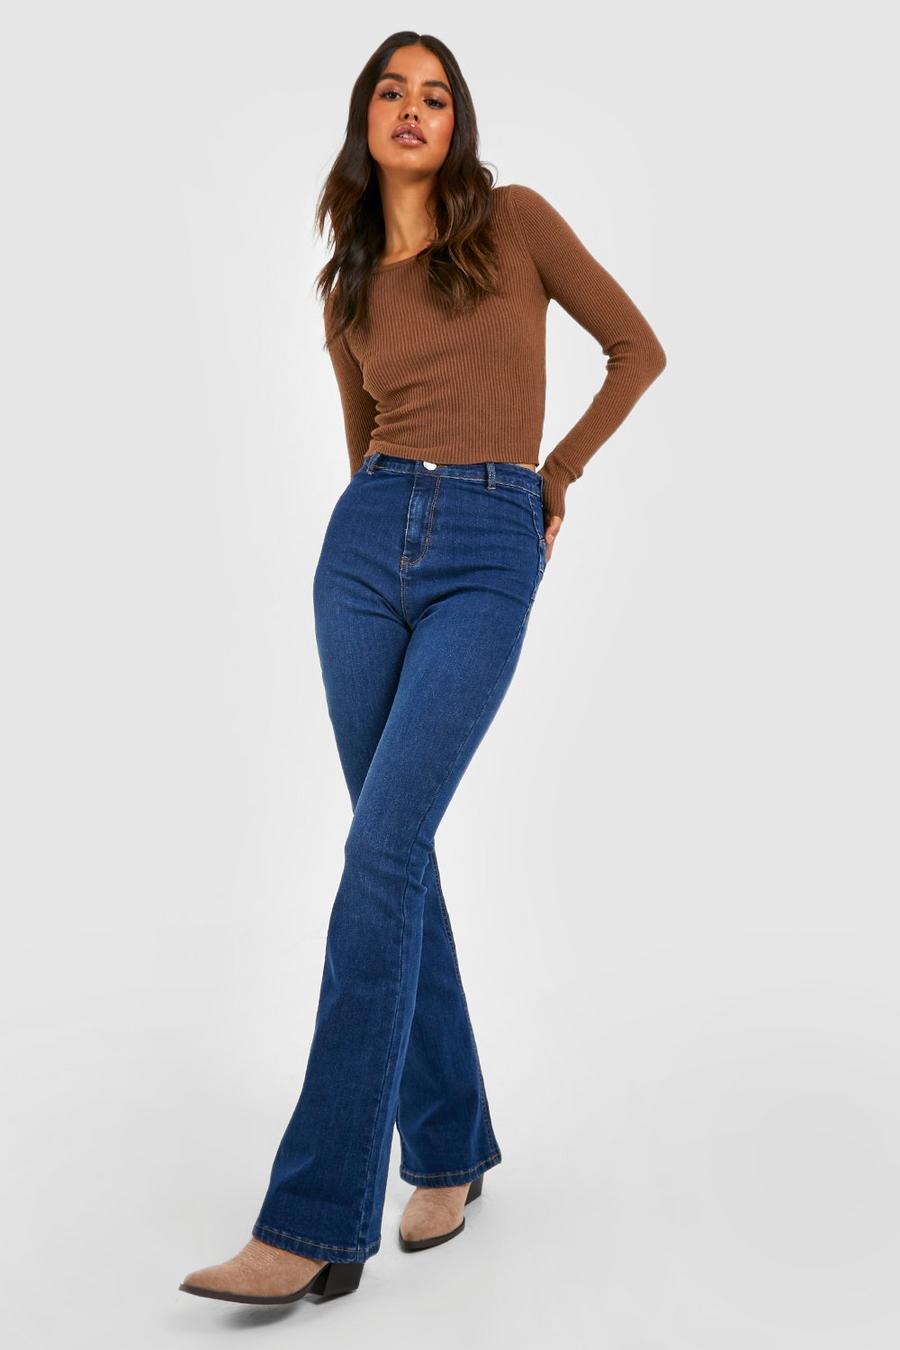 https://media.boohoo.com/i/boohoo/gzz33086_indigo_xl/female-indigo-high-waisted-flared-jeans/?w=900&qlt=default&fmt.jp2.qlt=70&fmt=auto&sm=fit